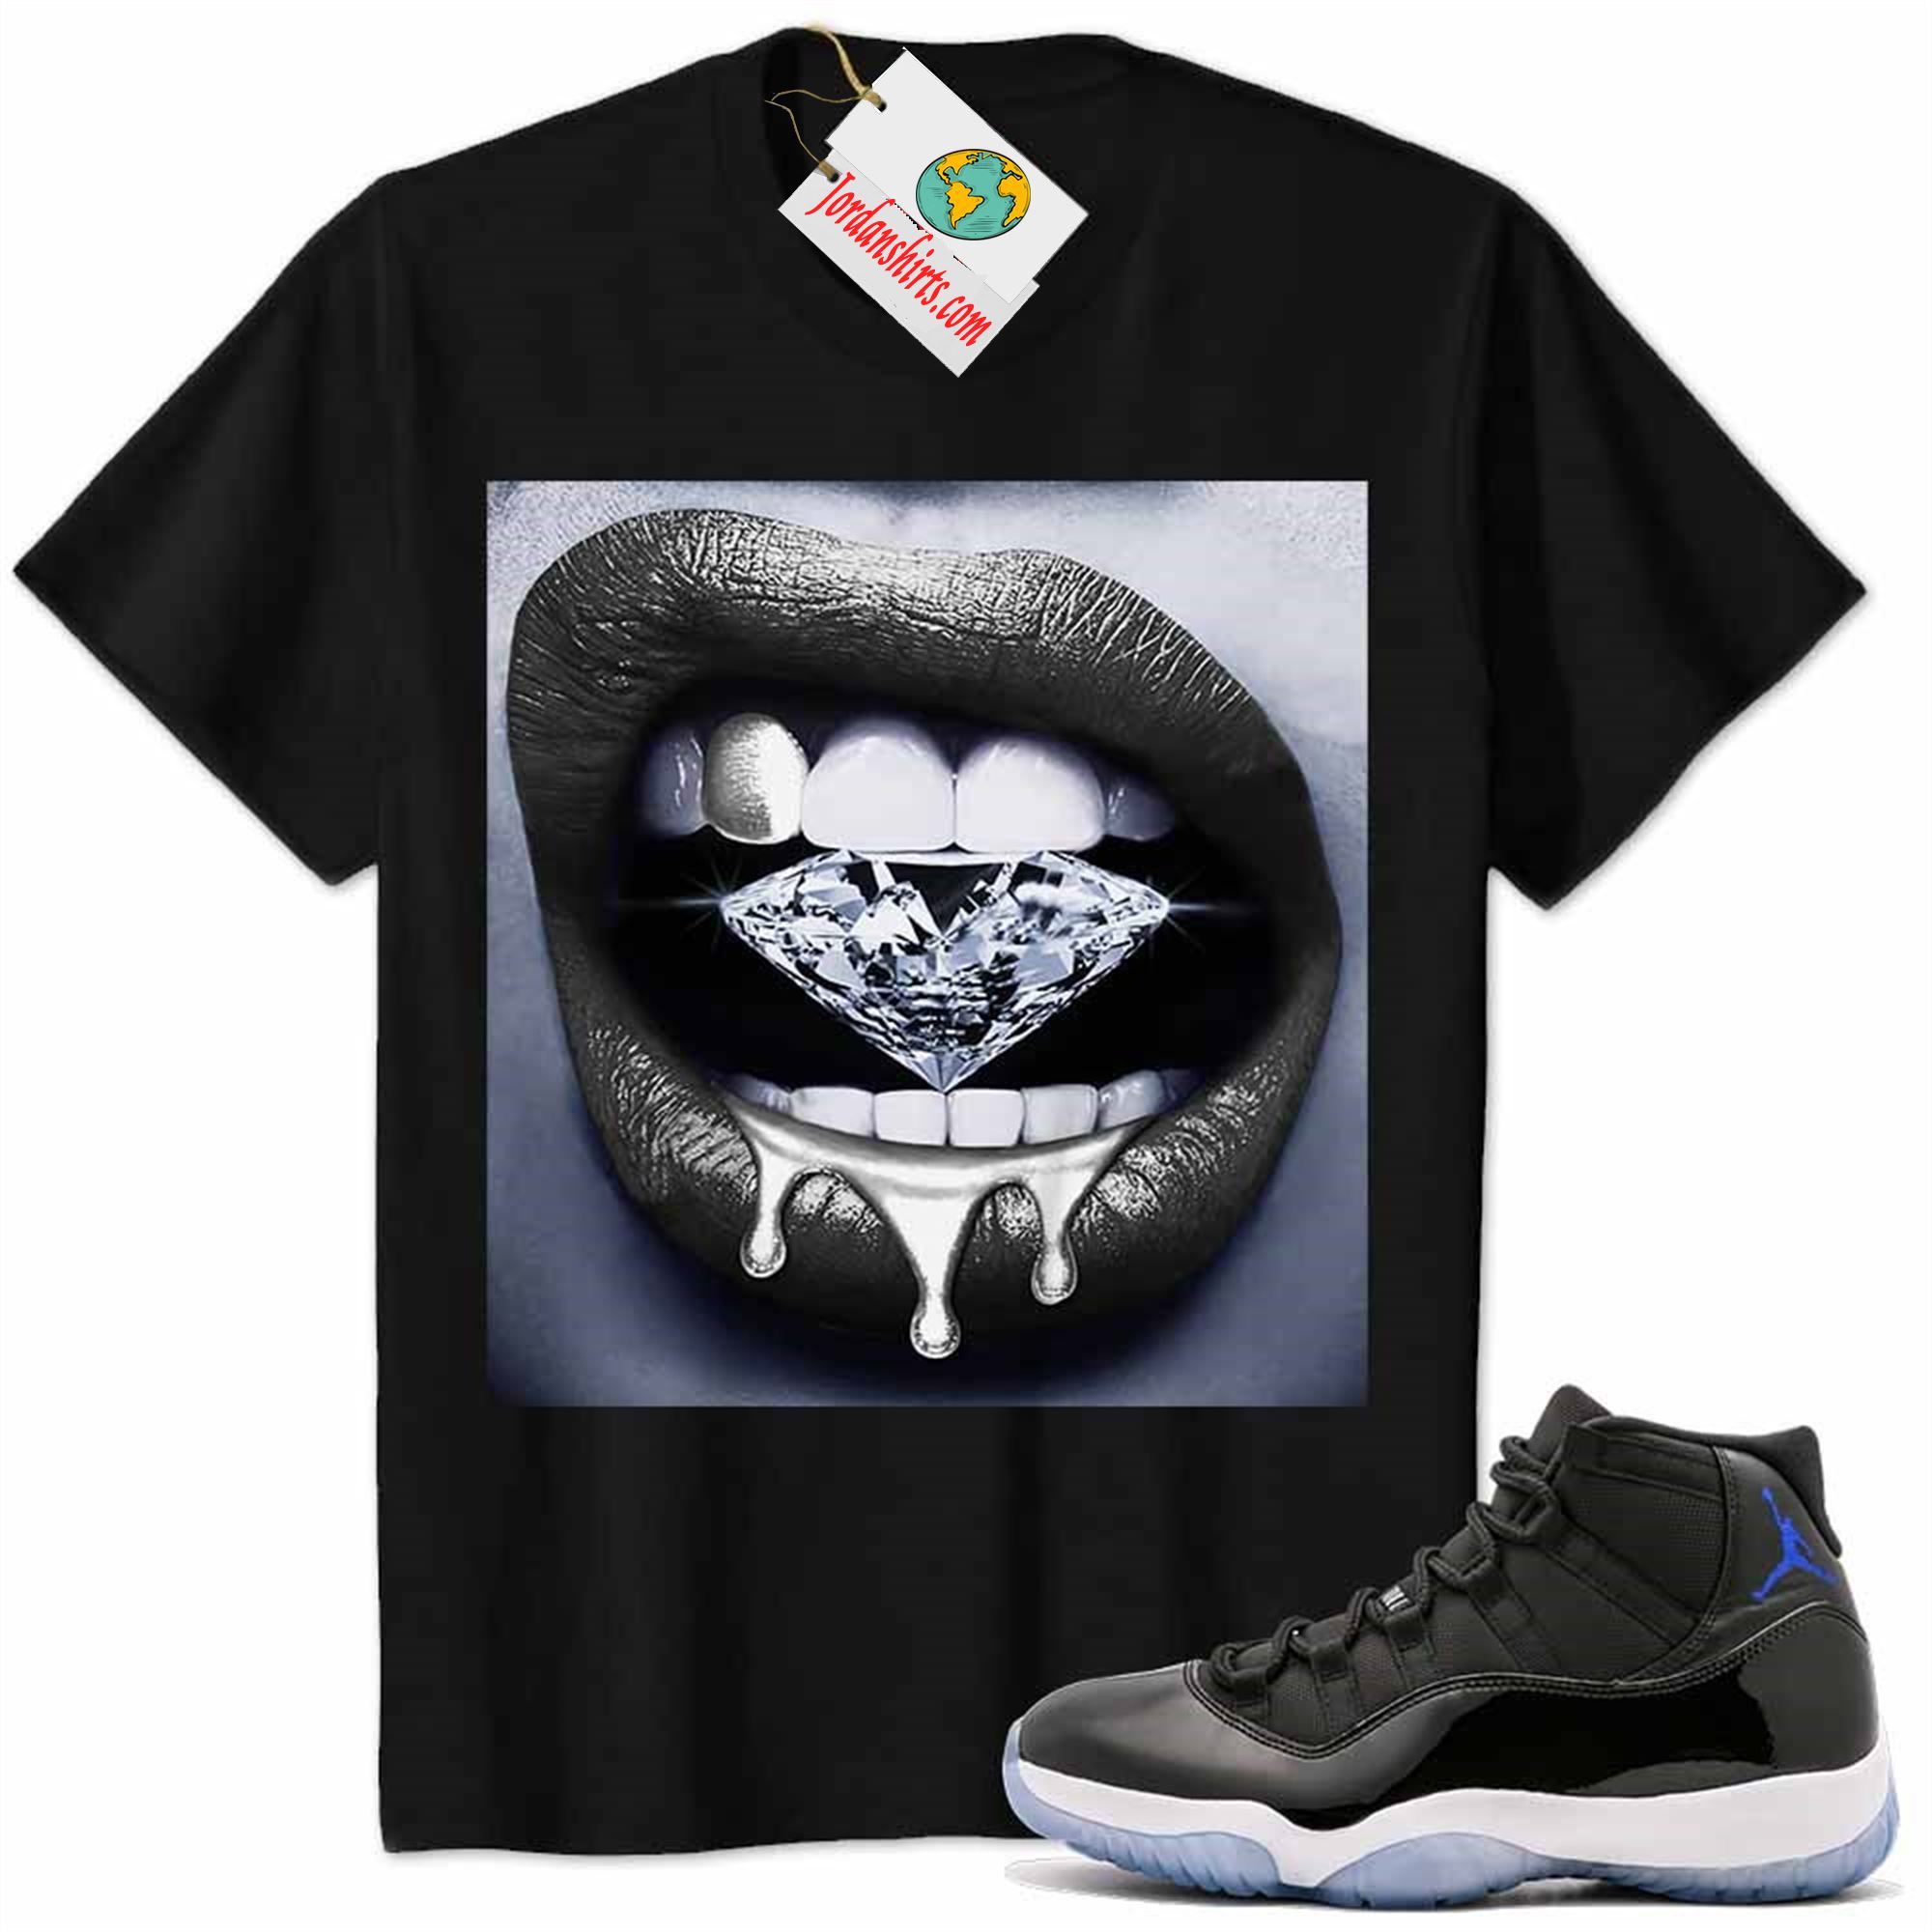 Jordan 11 Shirt, Jordan 11 Space Jam Shirt Sexy Lip Bite Diamond Dripping Black Plus Size Up To 5xl